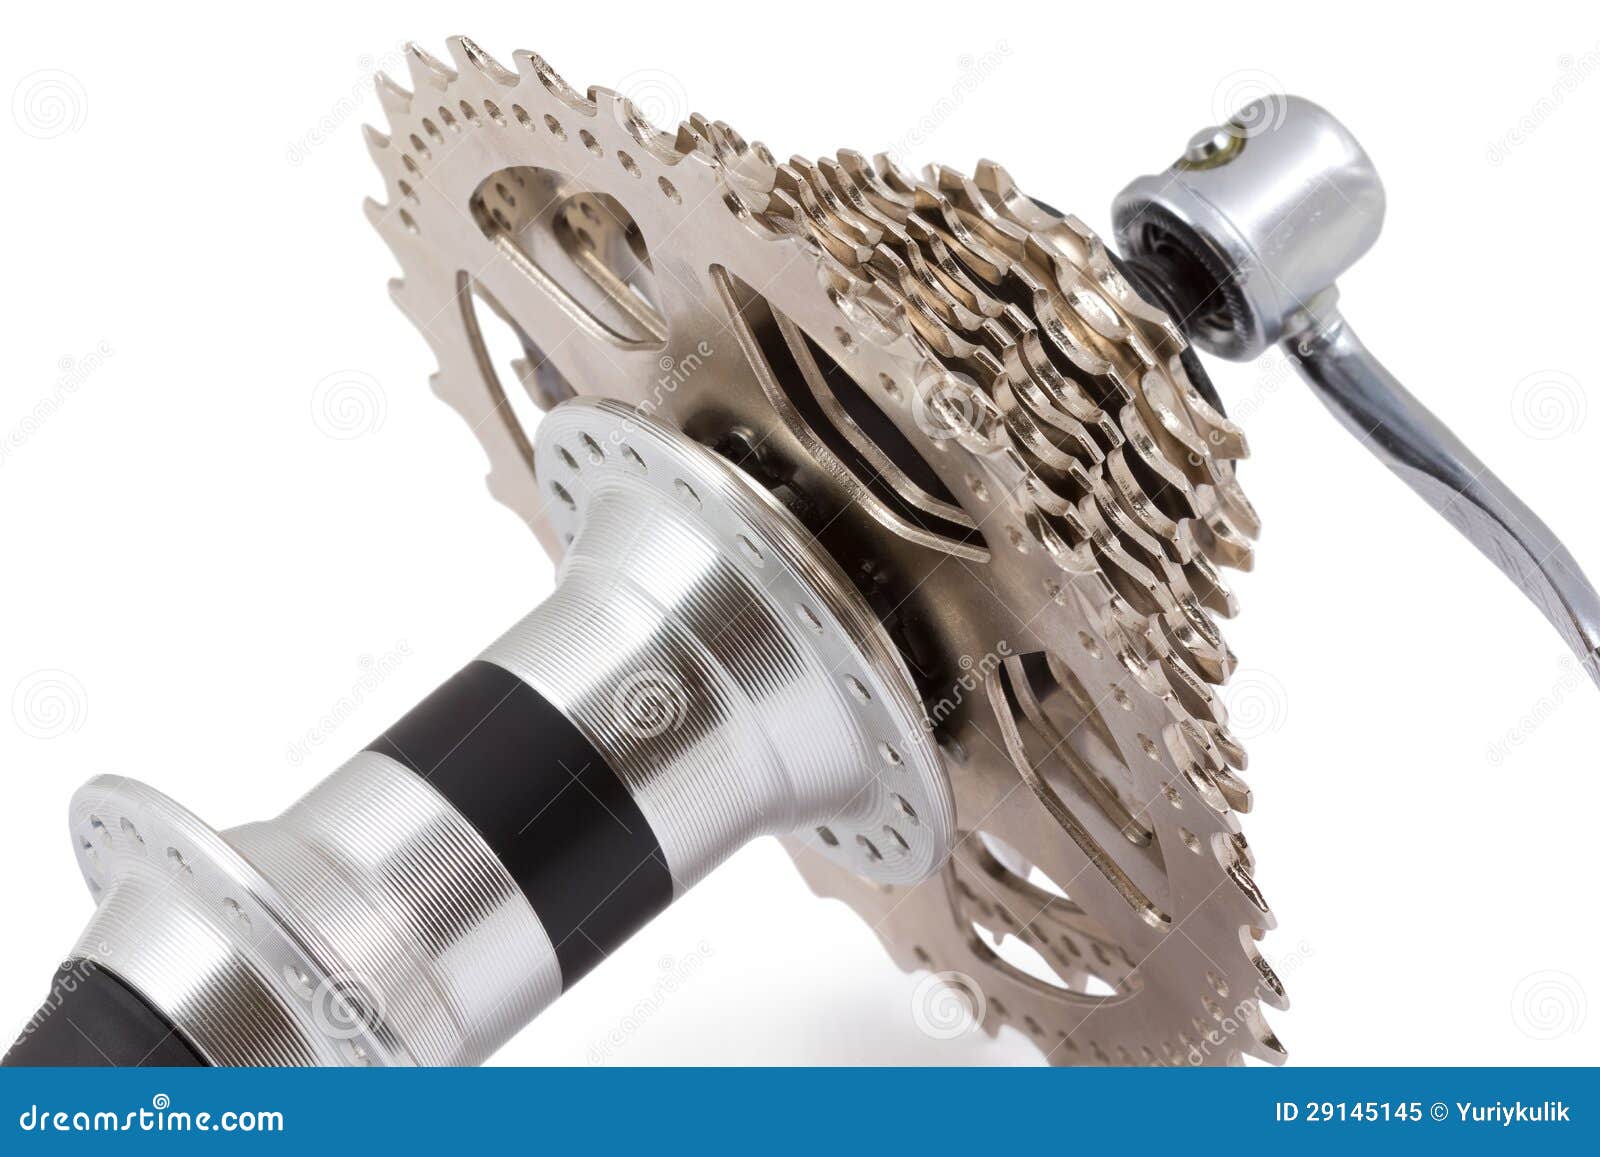 Bicycle rear hub stock image. Image of bicycle, sleek - 29145145